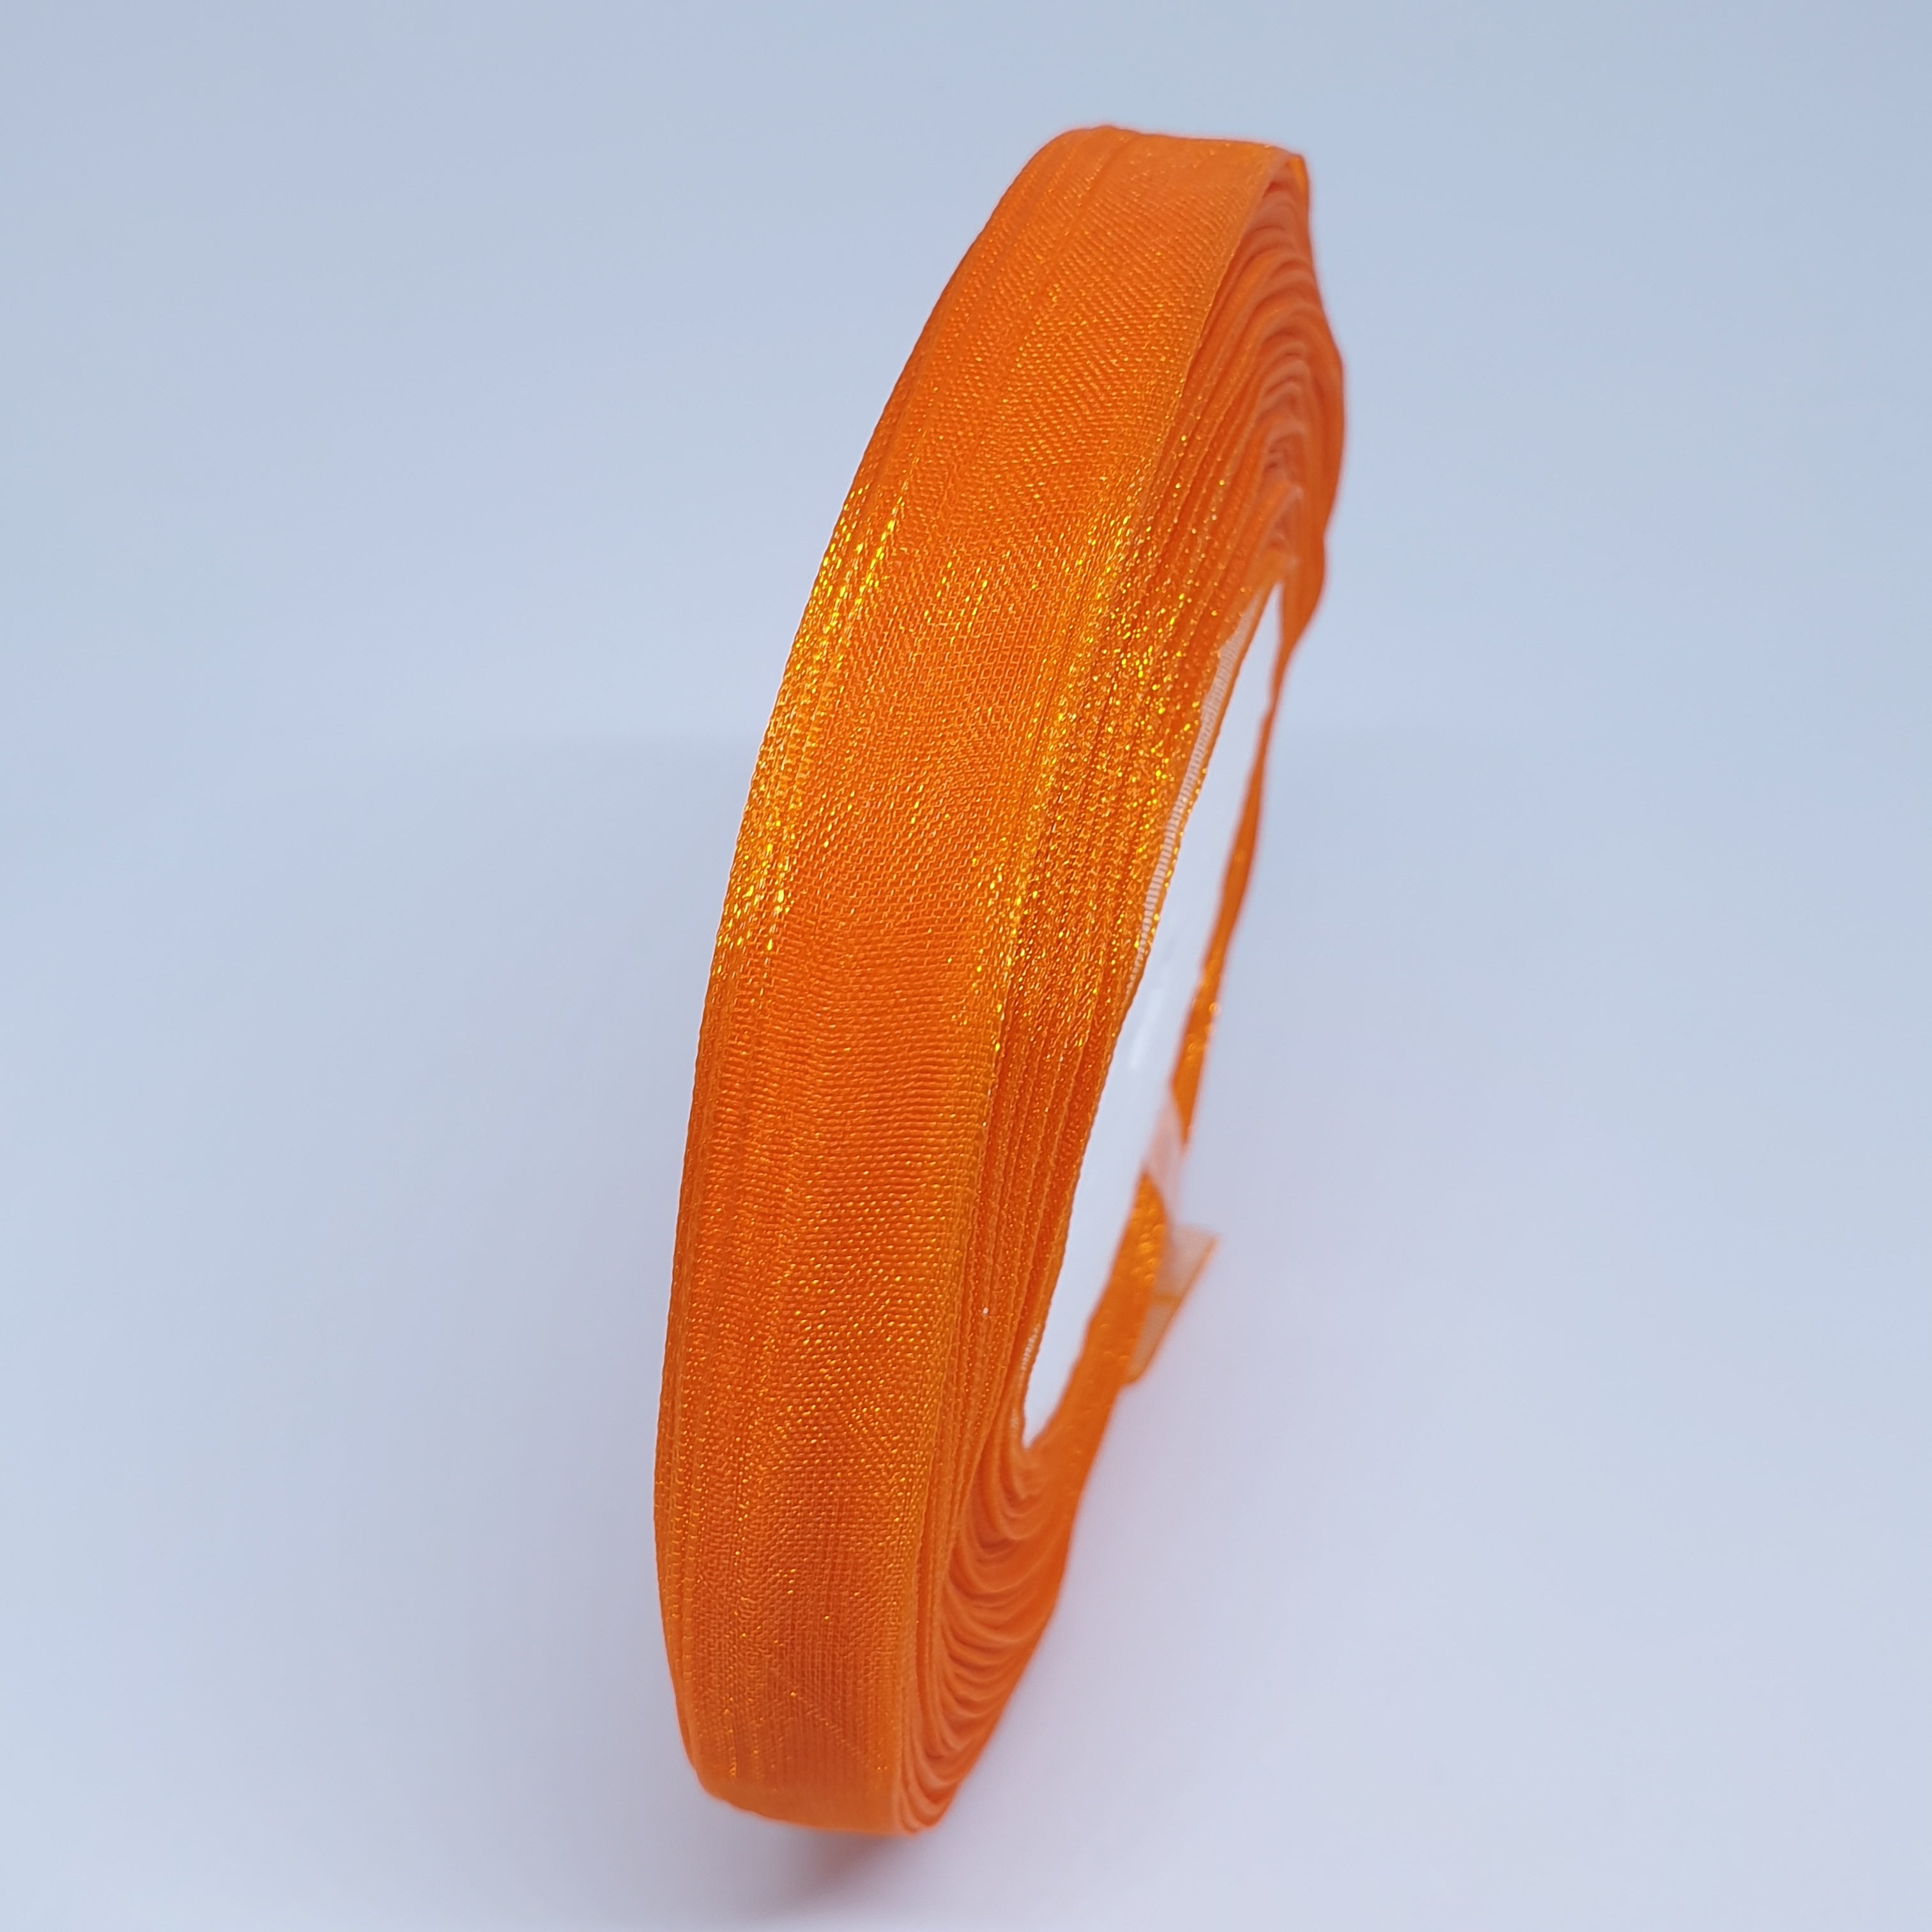 MajorCrafts 10mm 45metres Deep Orange Sheer Organza Fabric Ribbon Roll R25